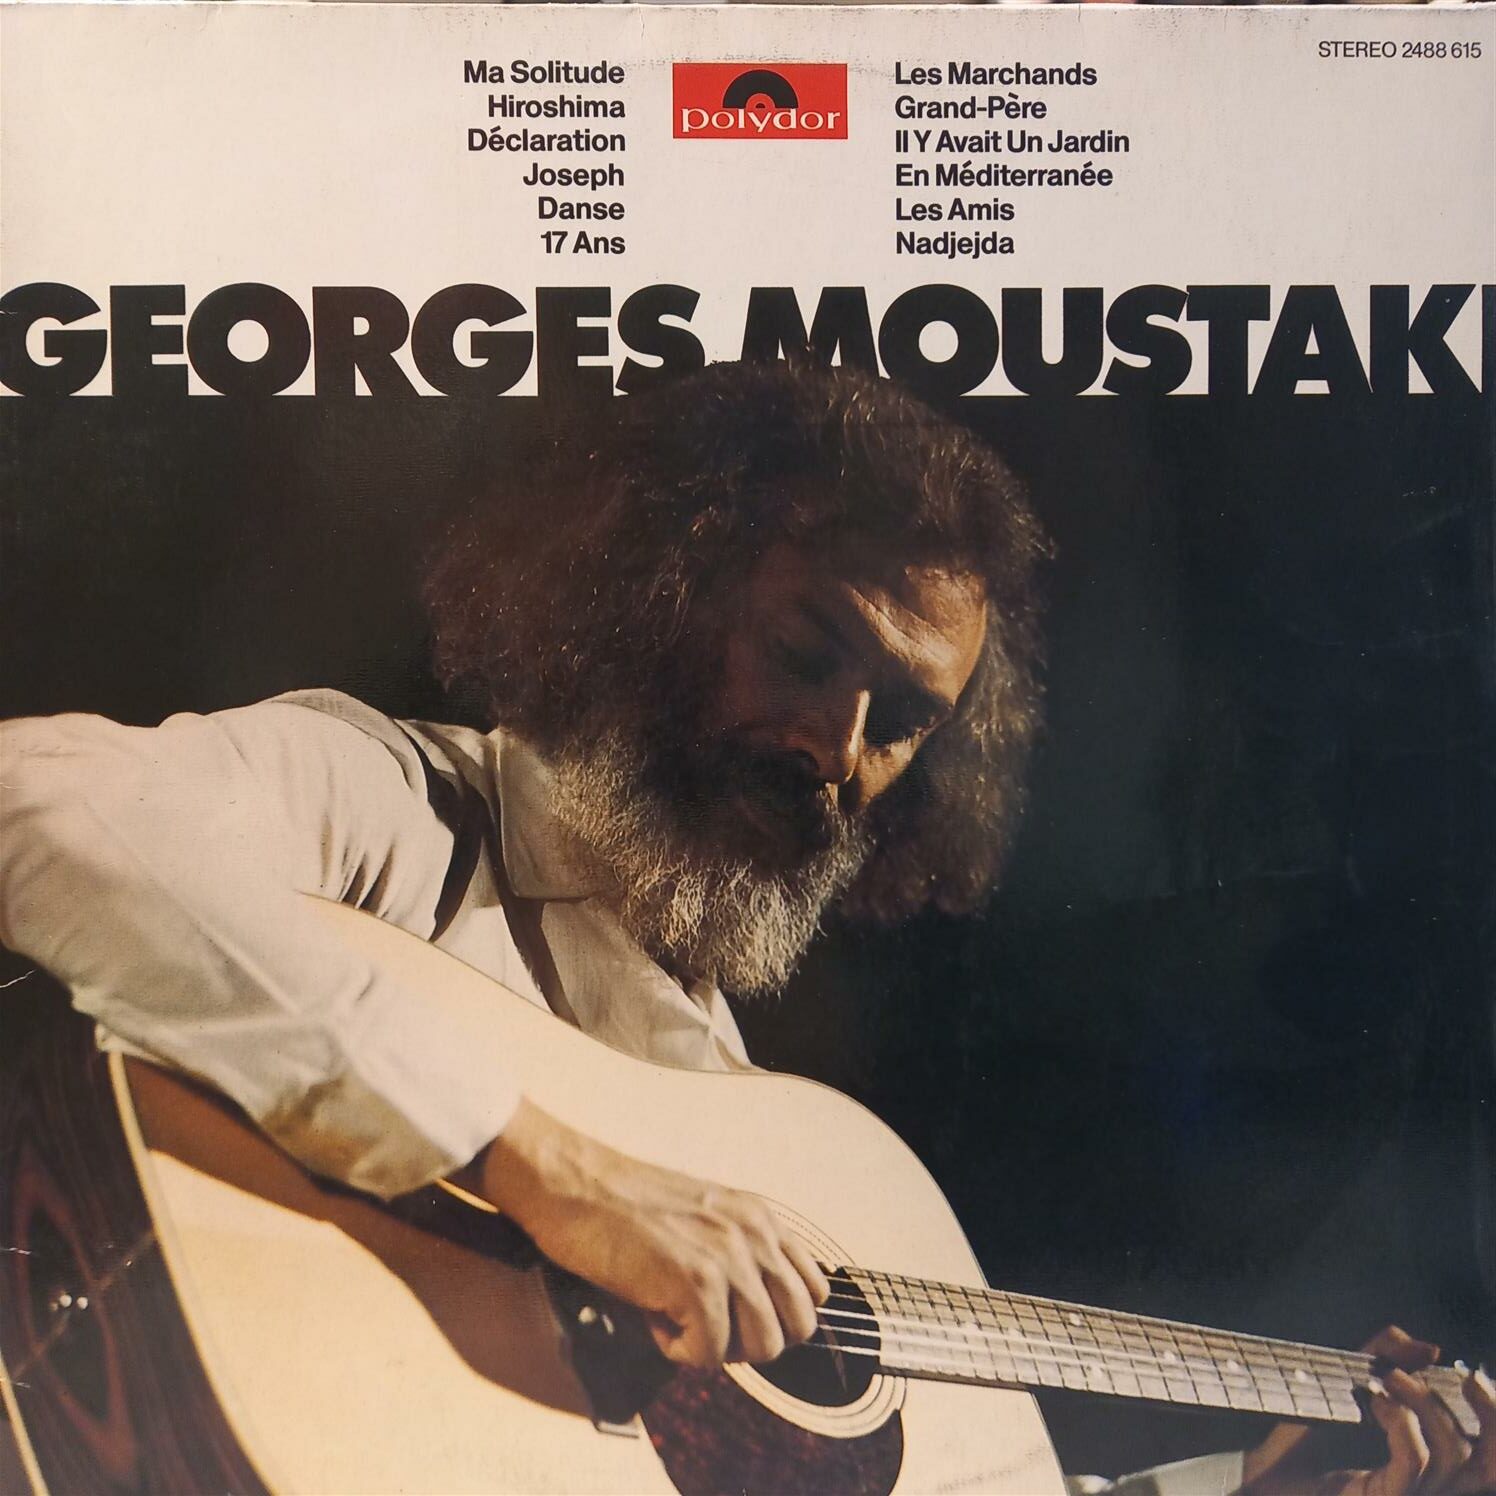 GEORGES MOUSTAKI – GEORGES MOUSTAKI ON